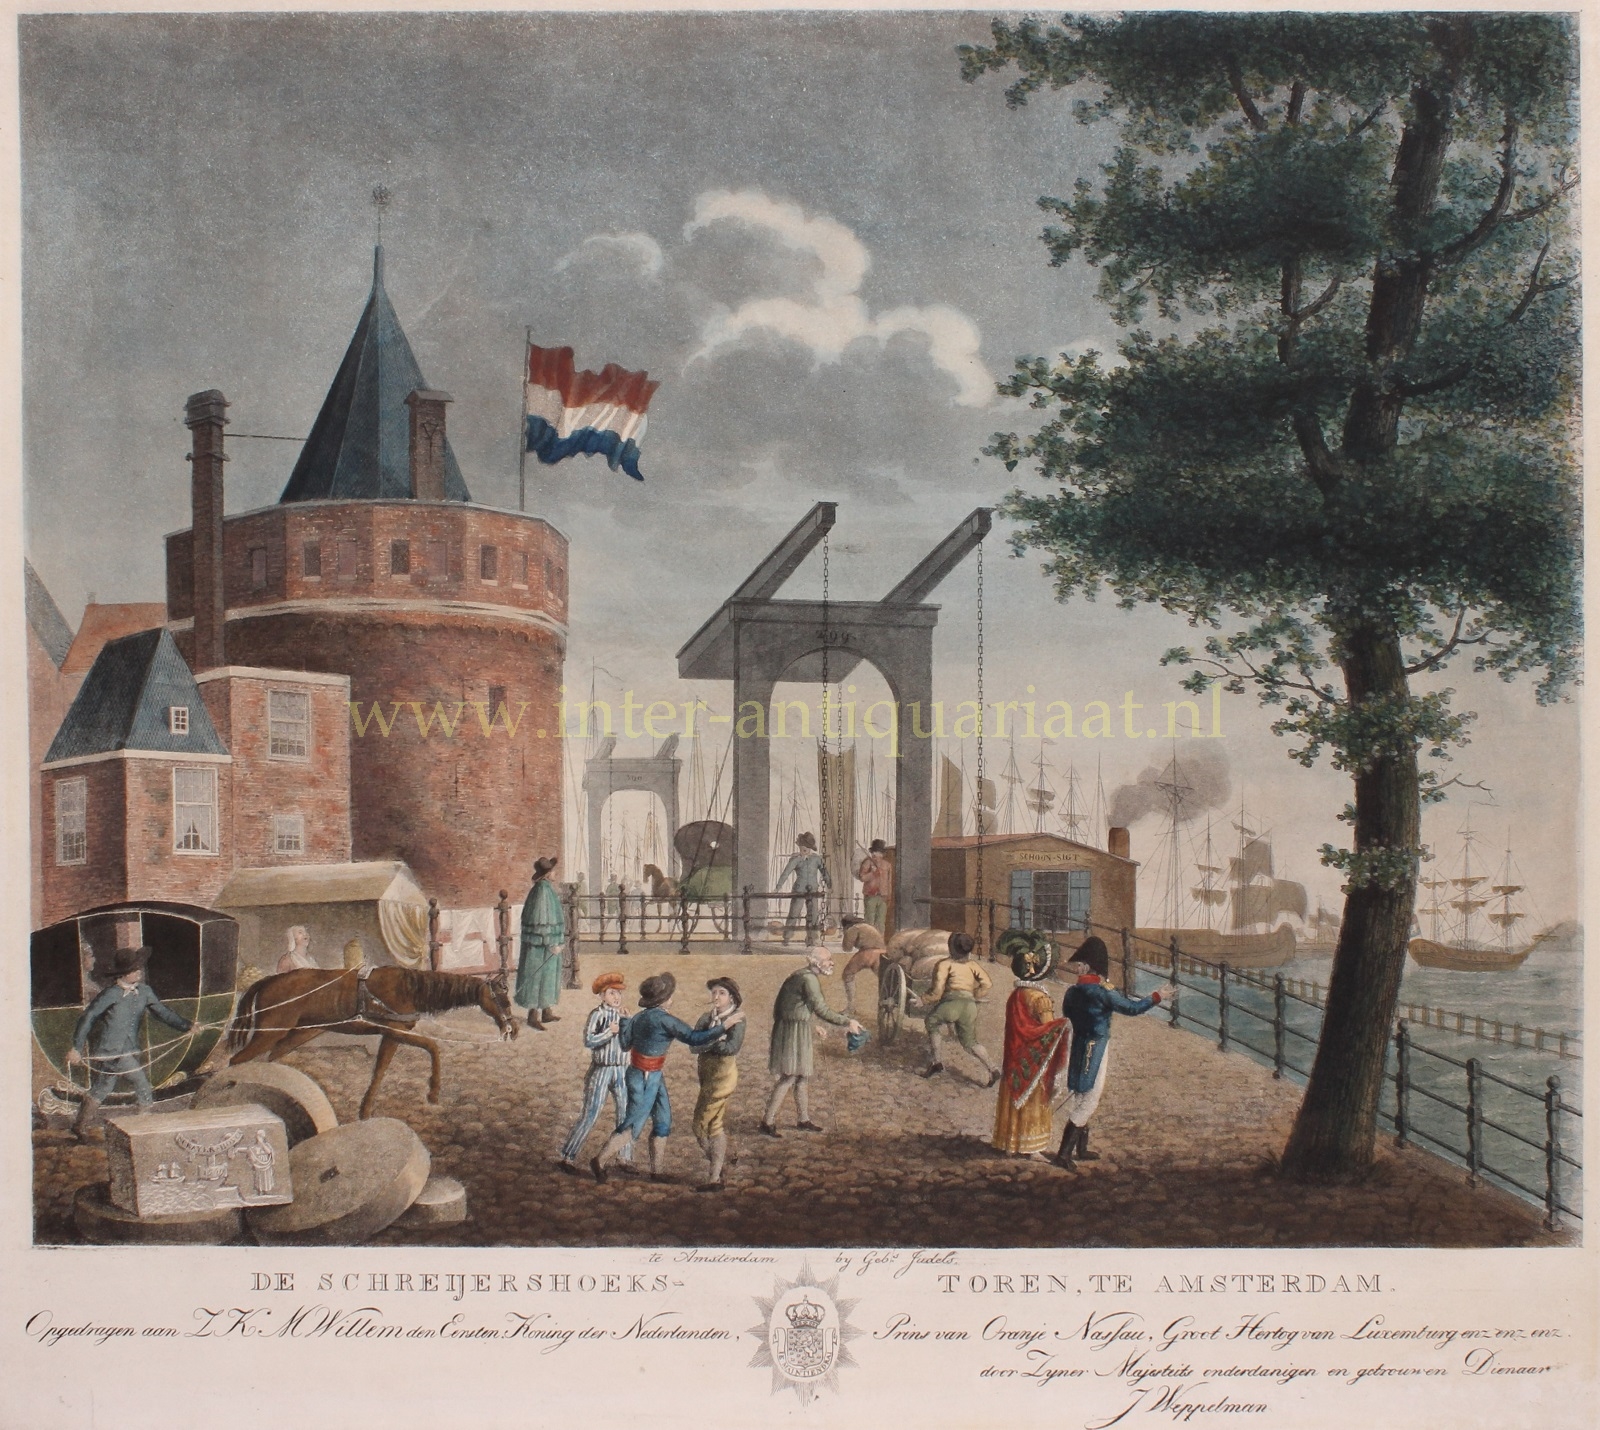 Hoogkamer-- W.H. - Amsterdam, Schreierstoren - Willem Hendrik Hoogkamer, c. 1830